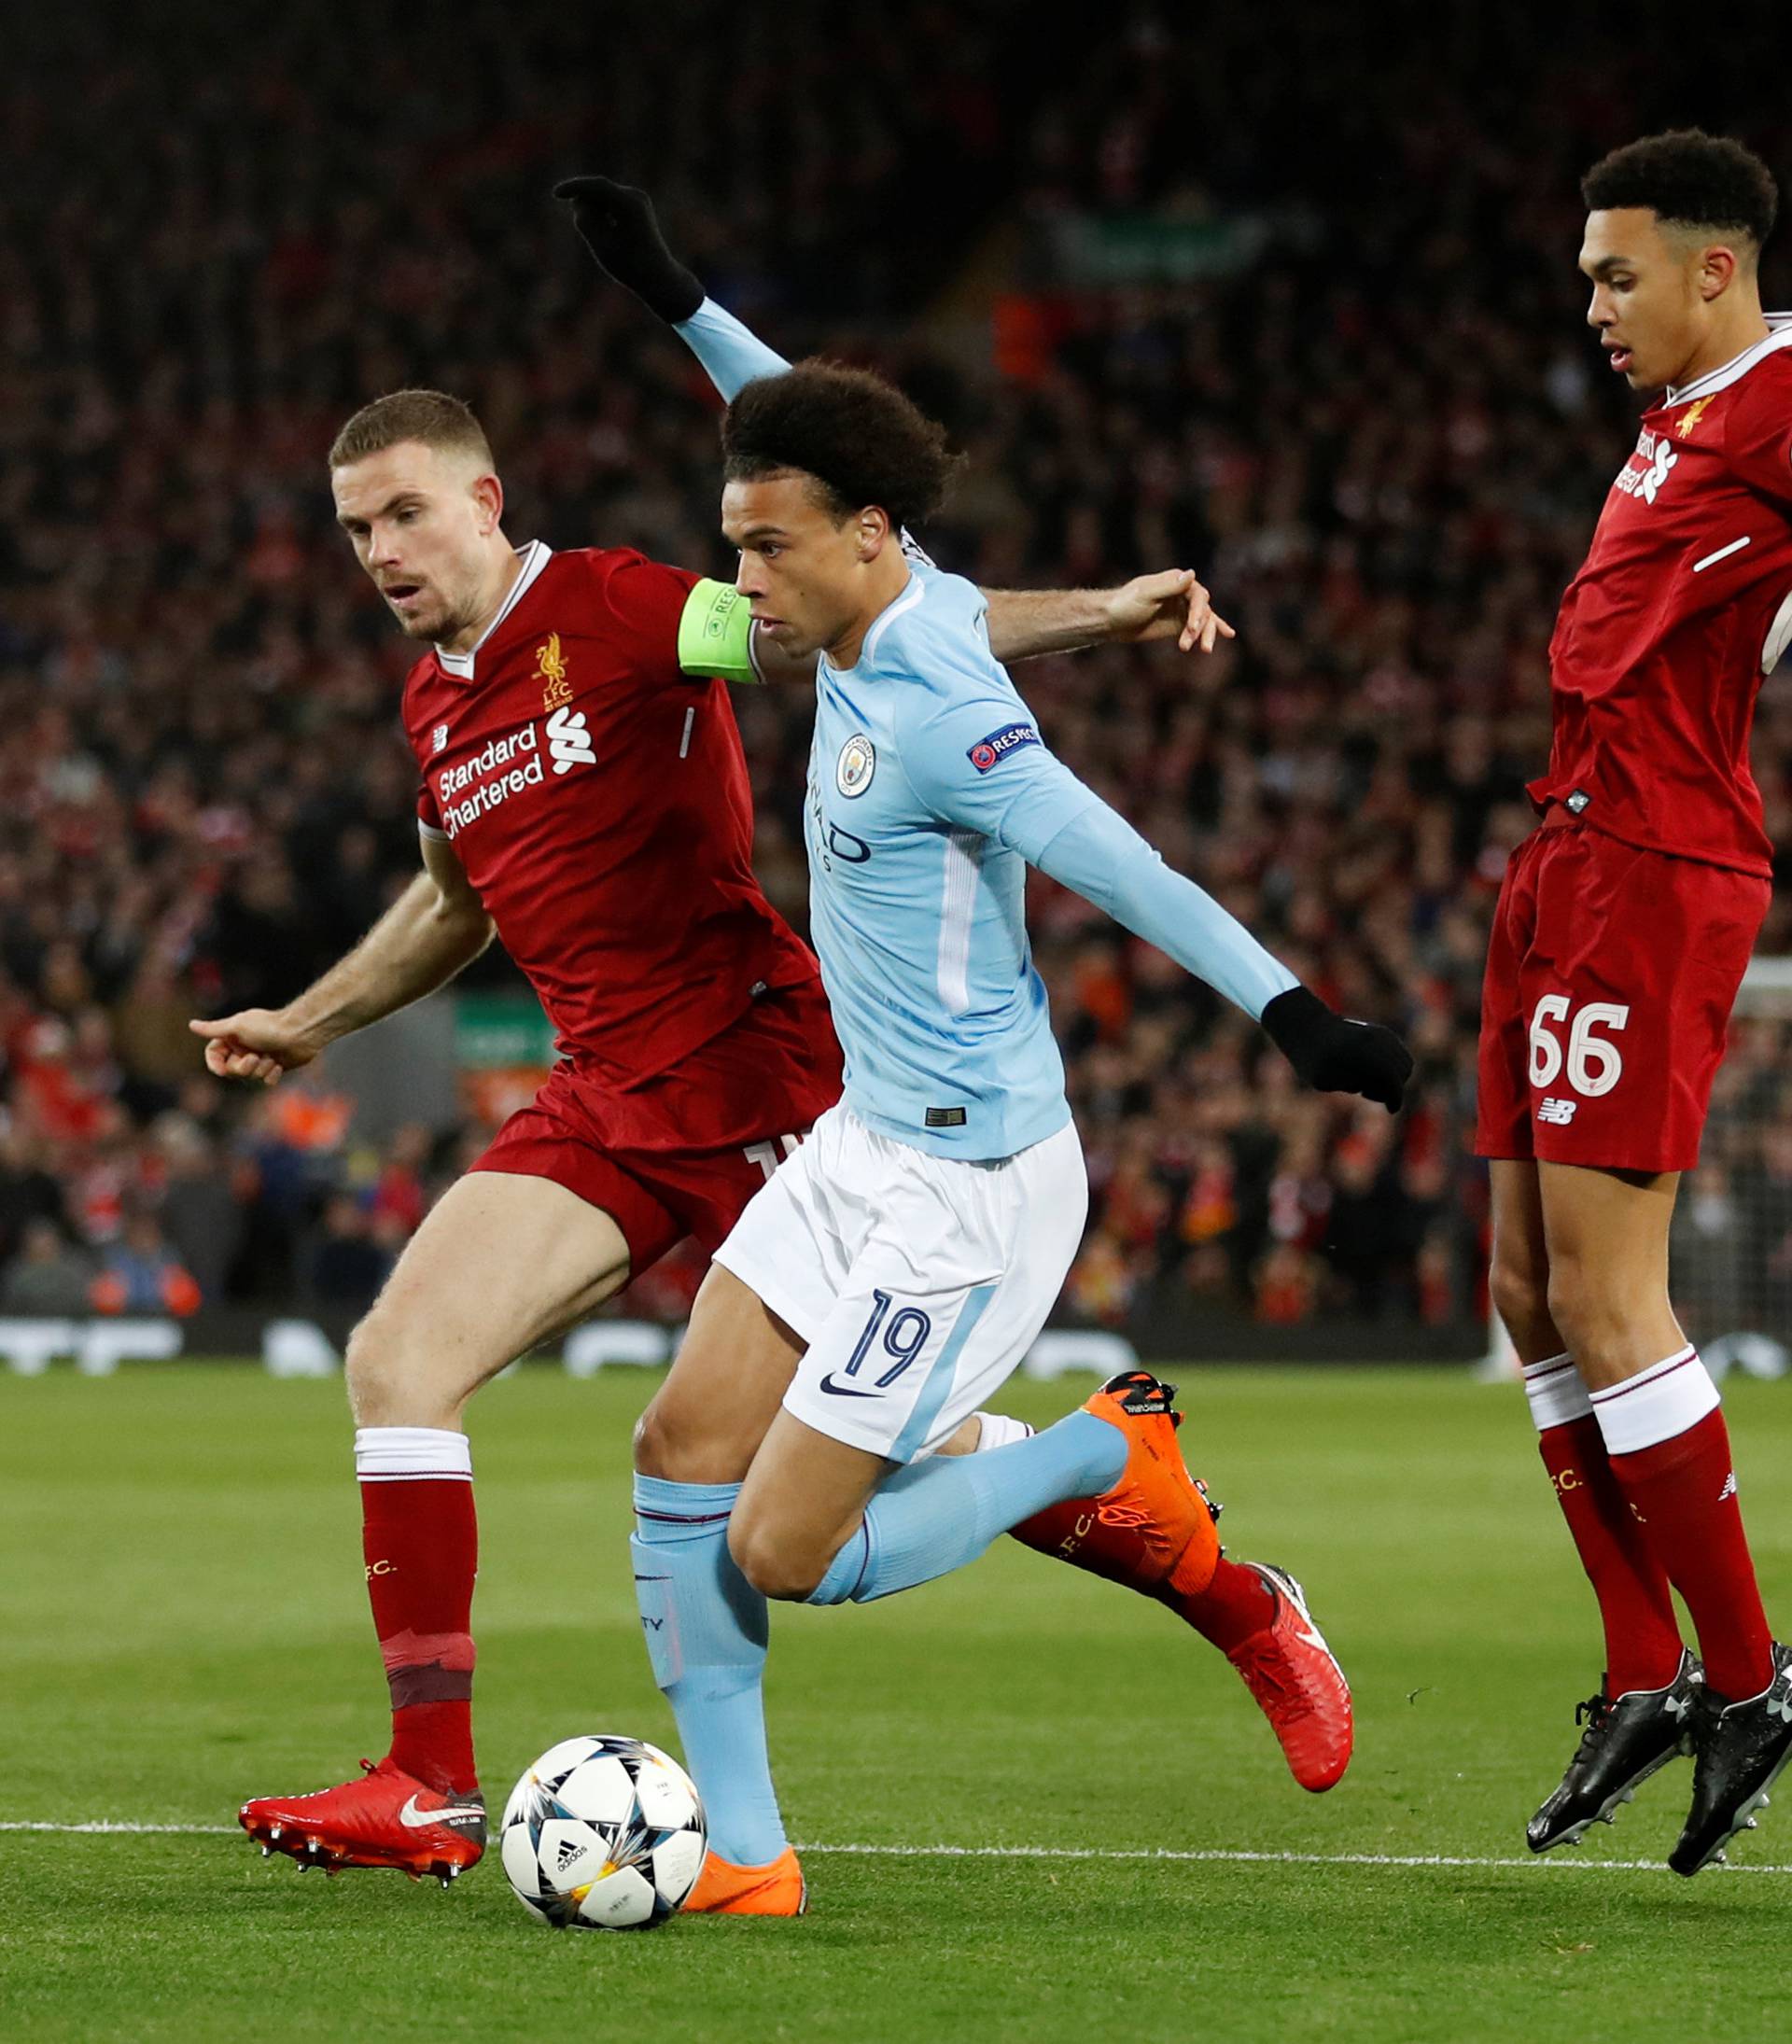 Champions League Quarter Final First Leg - Liverpool vs Manchester City